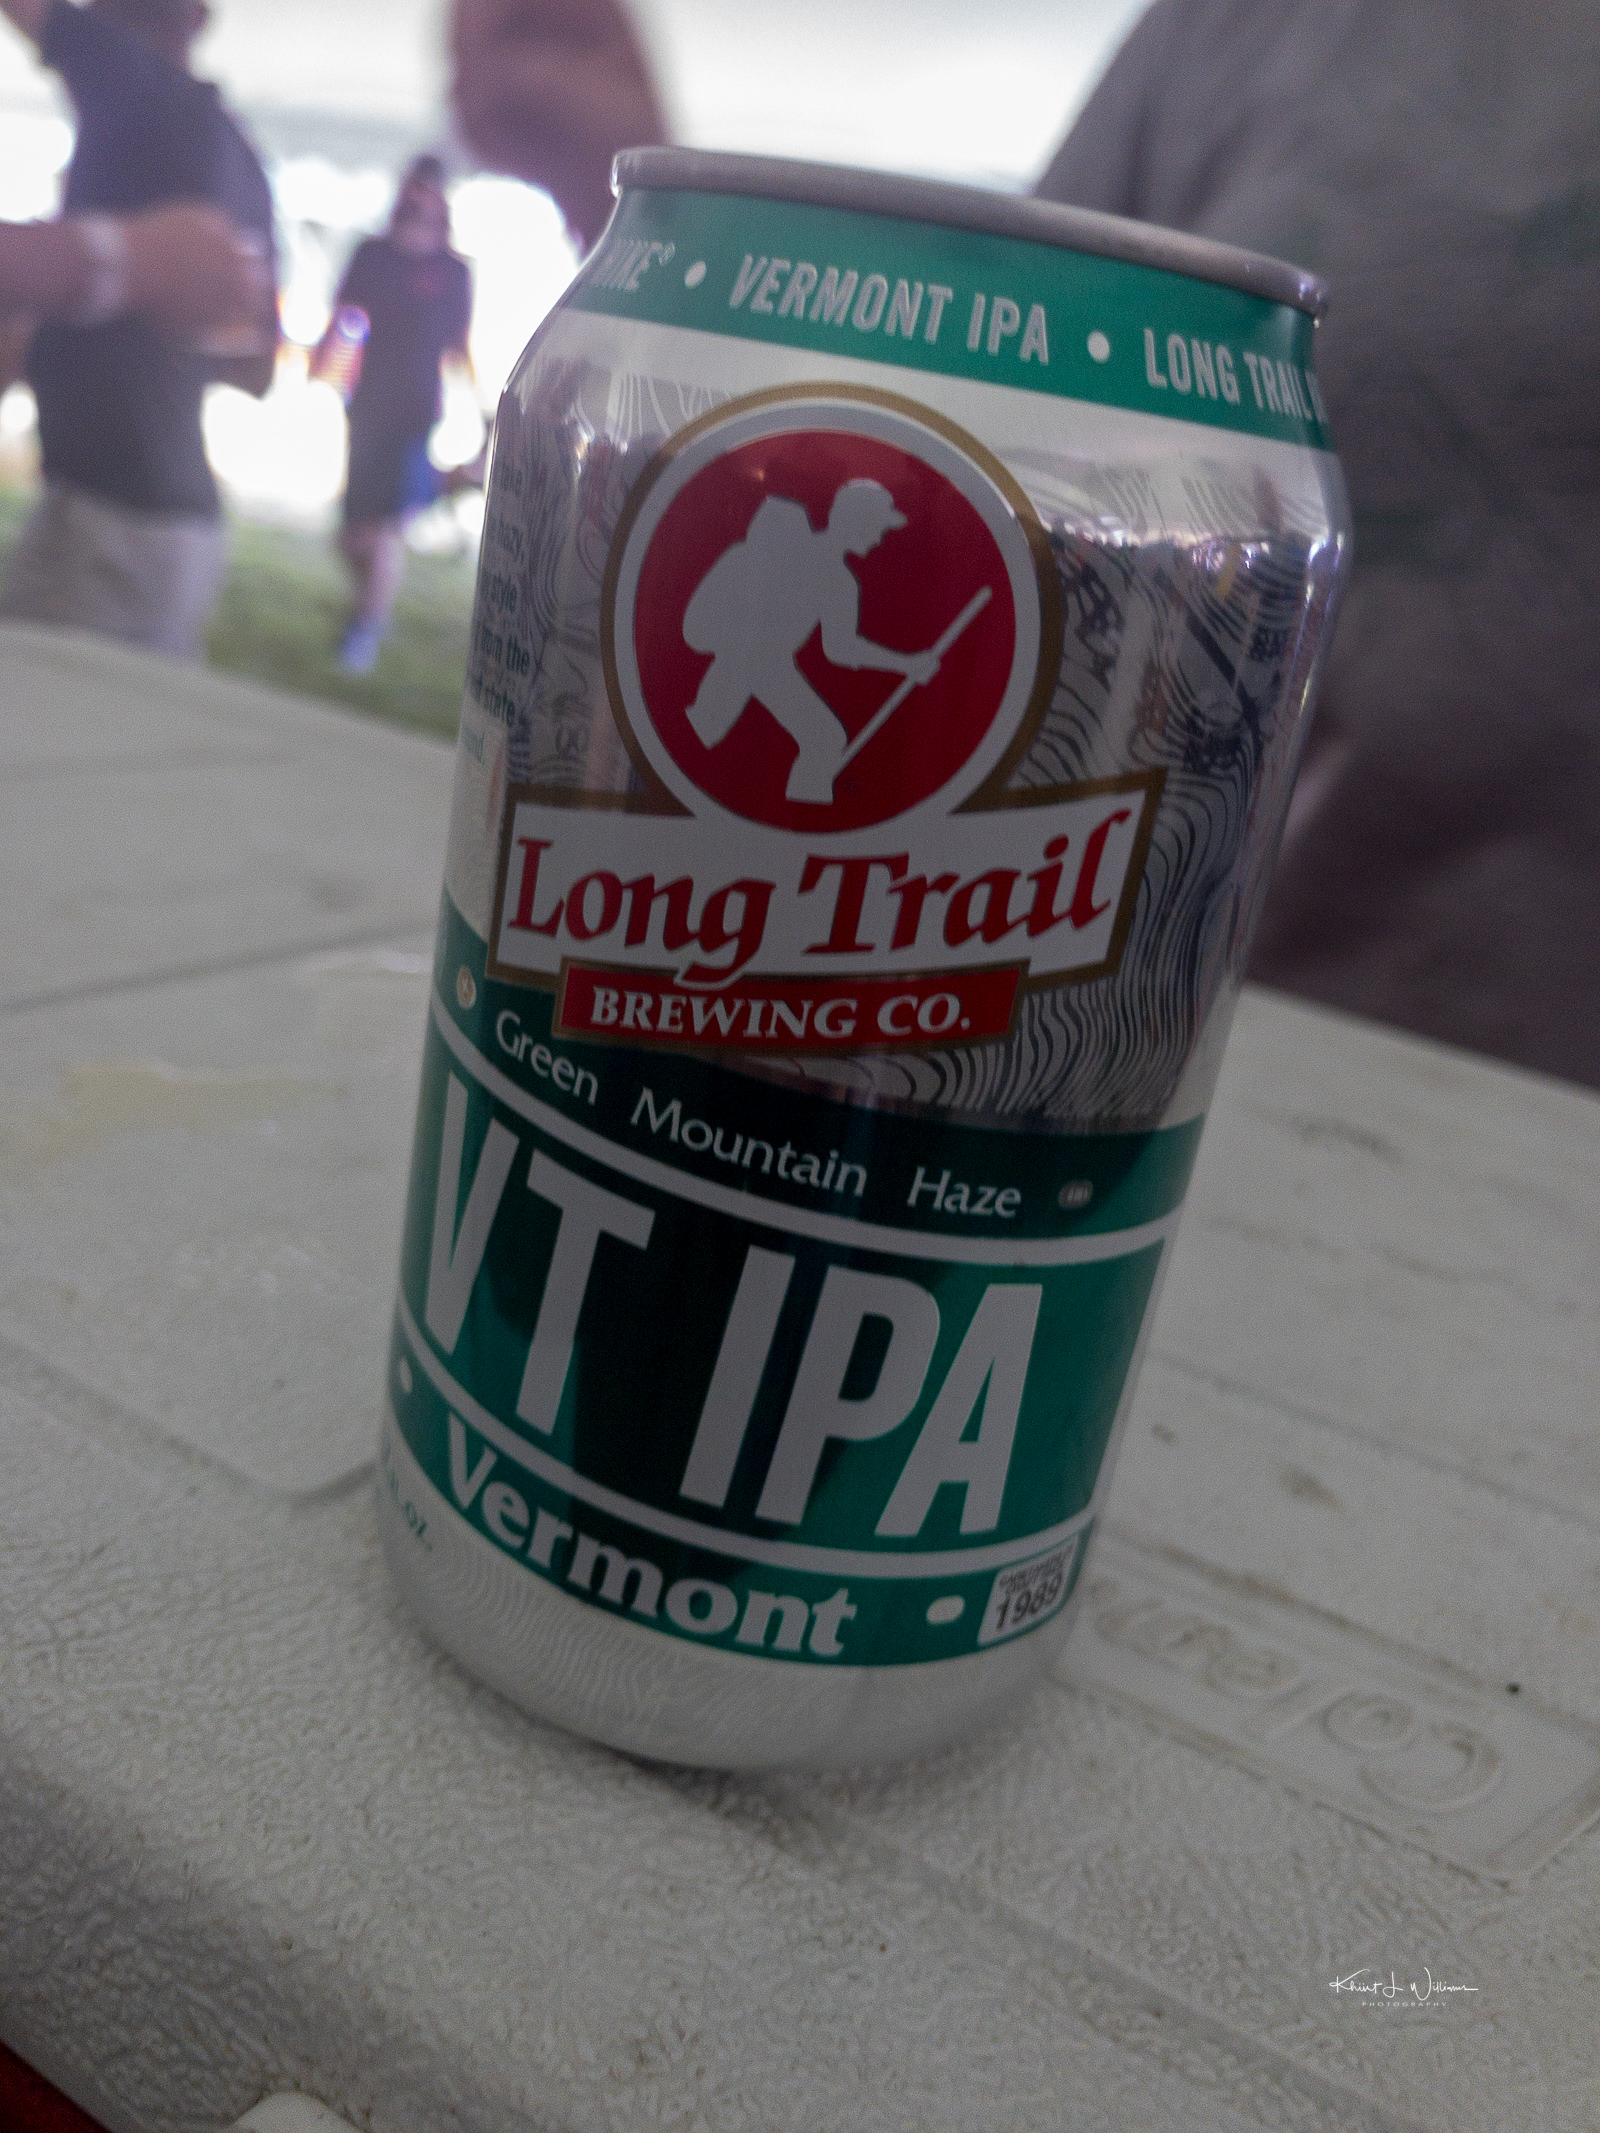 Long Trail Brewing Company's VT IPA